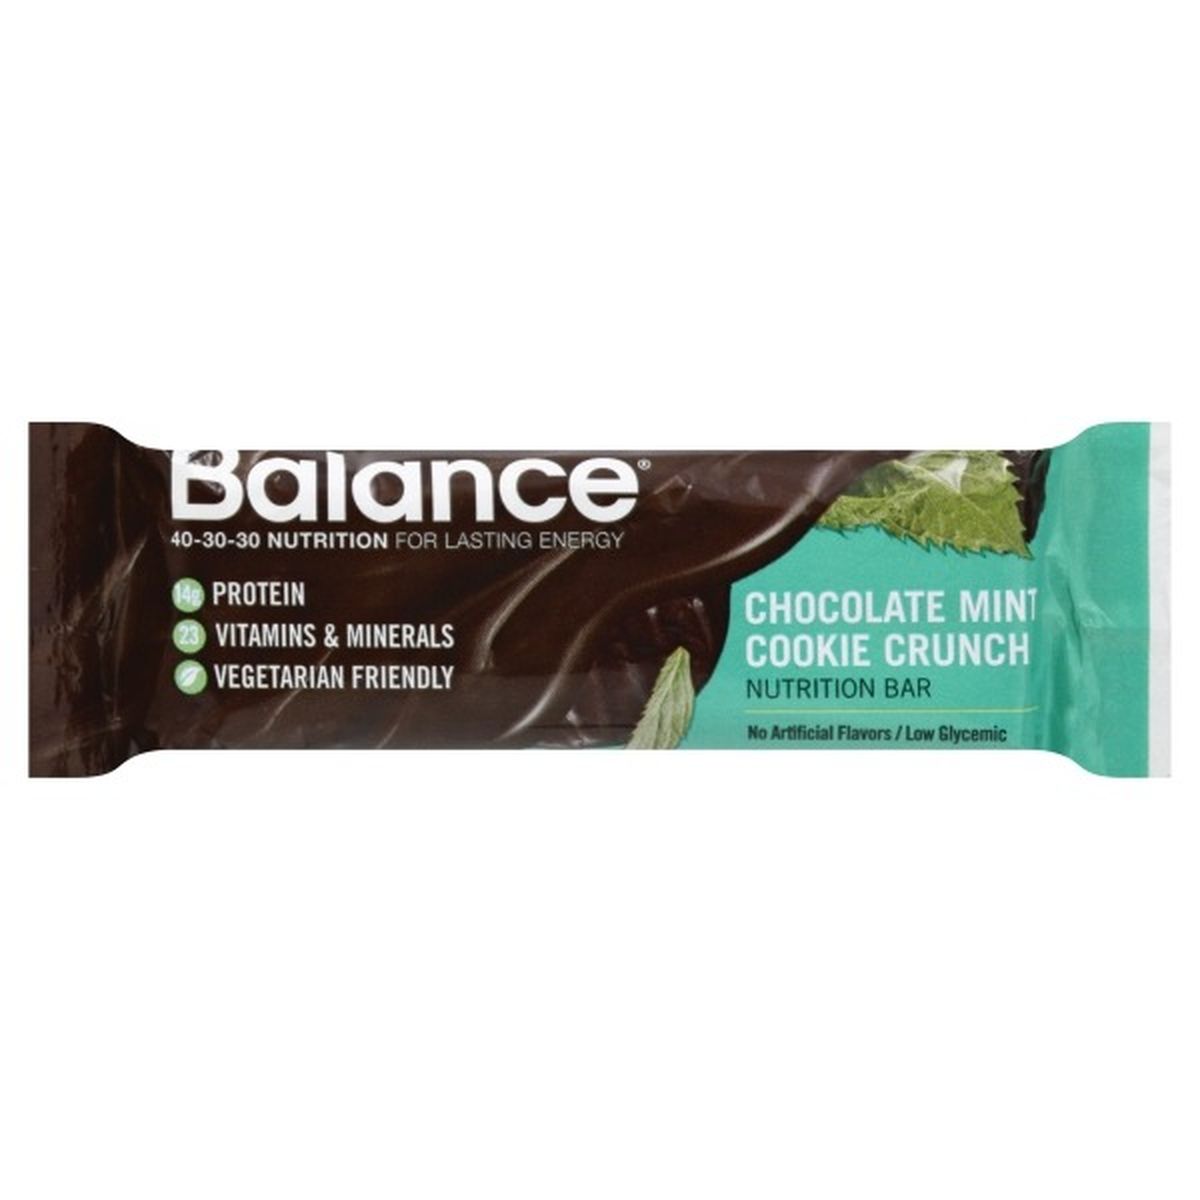 Calories in Balance Bar Nutrition Bar, Chocolate Mint Cookie Crunch